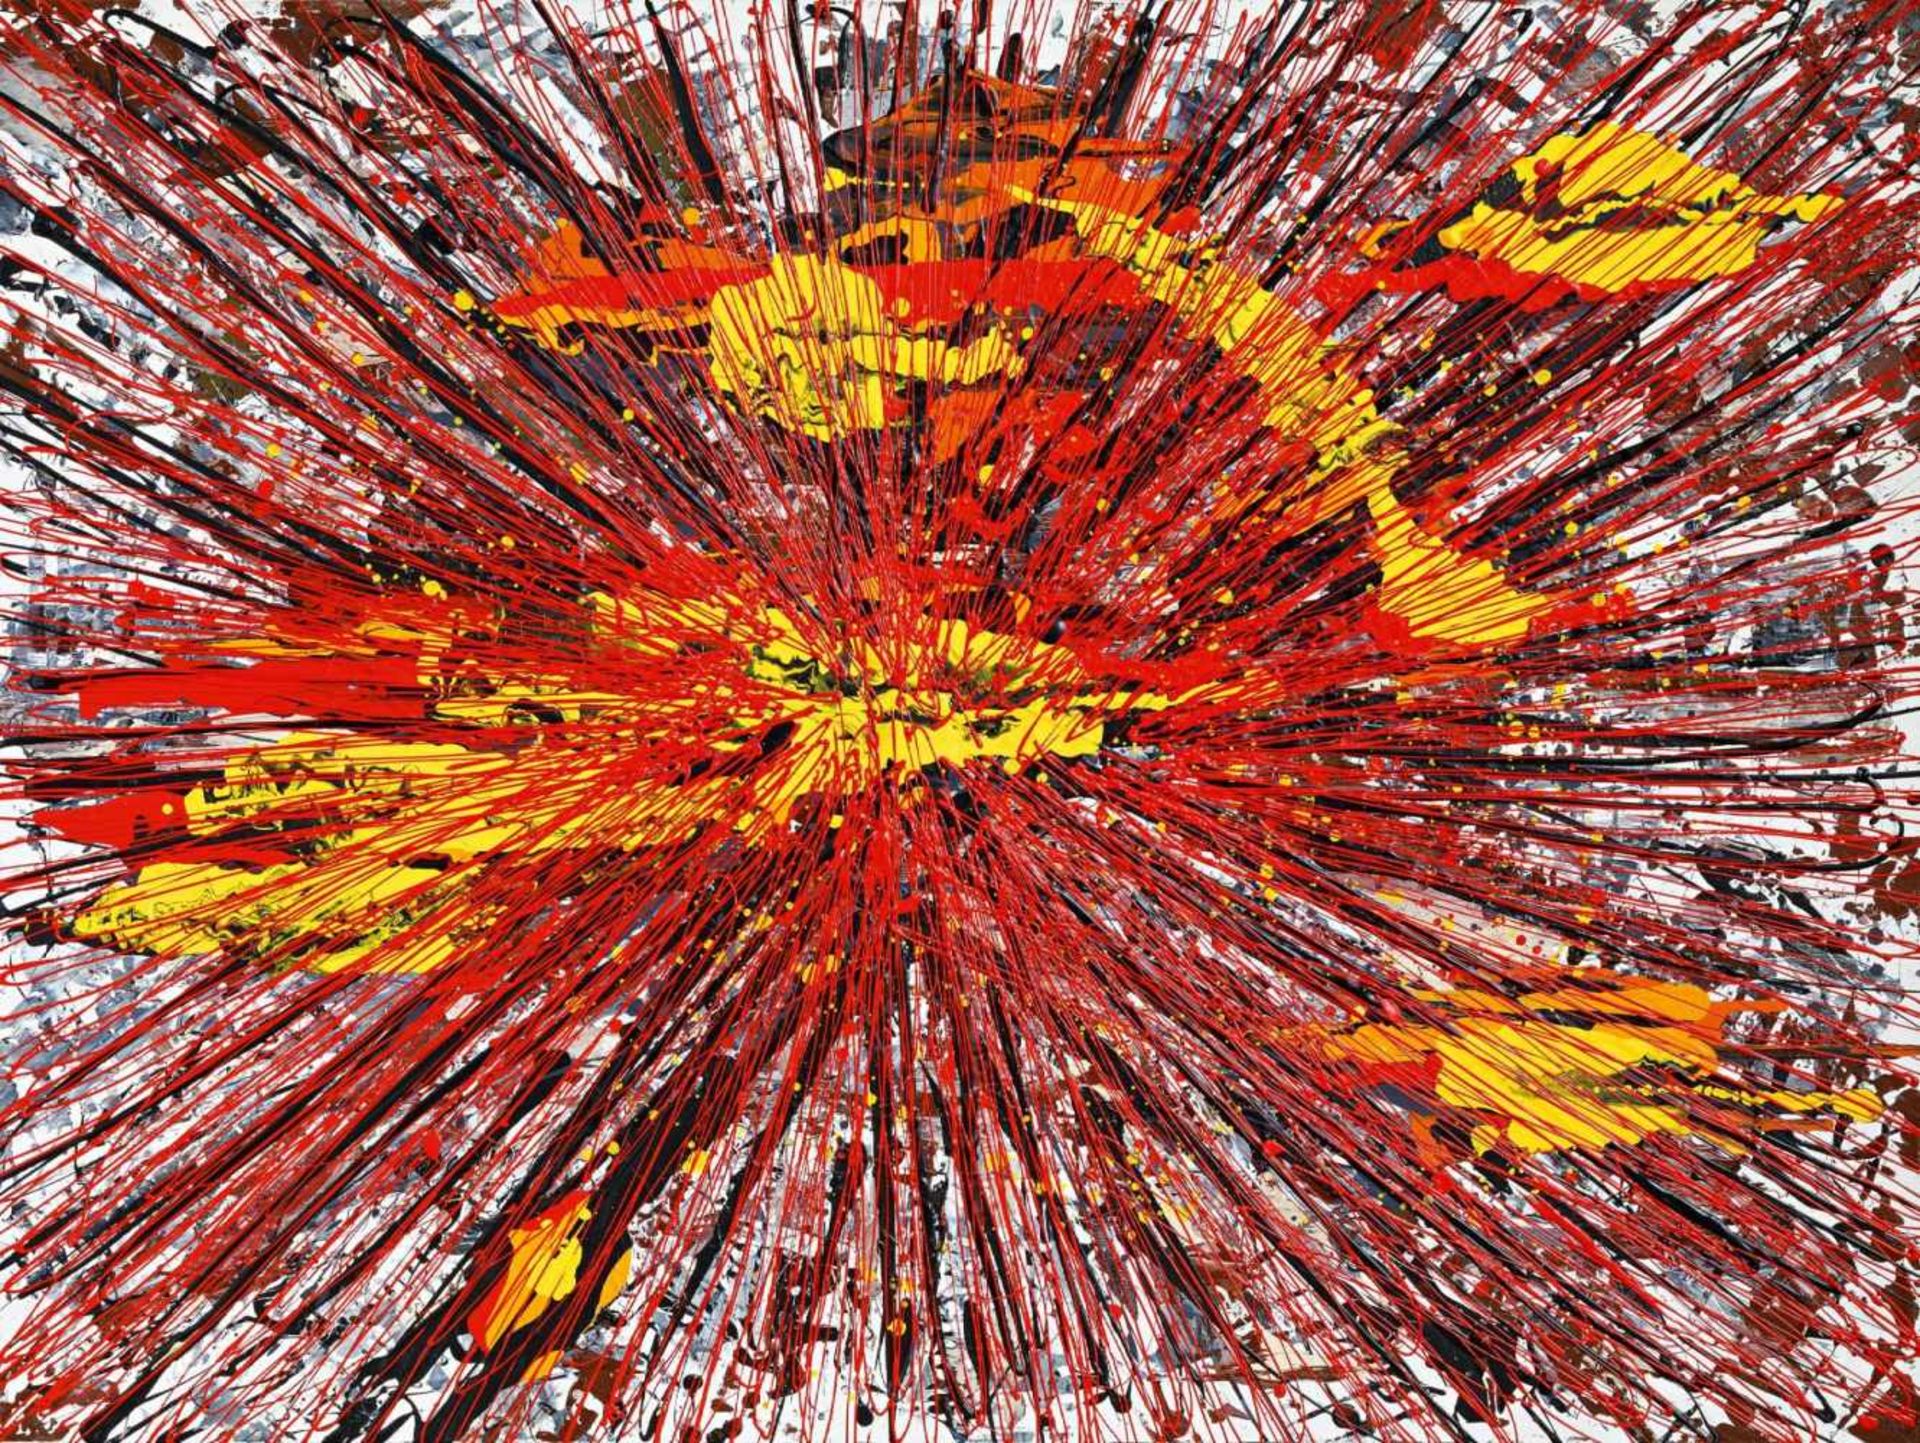 Decastro, Eric1960 Le Creusot/FrankreichOhne Titel. 2011. Acryl auf Leinwand. 120 x 160,5cm.